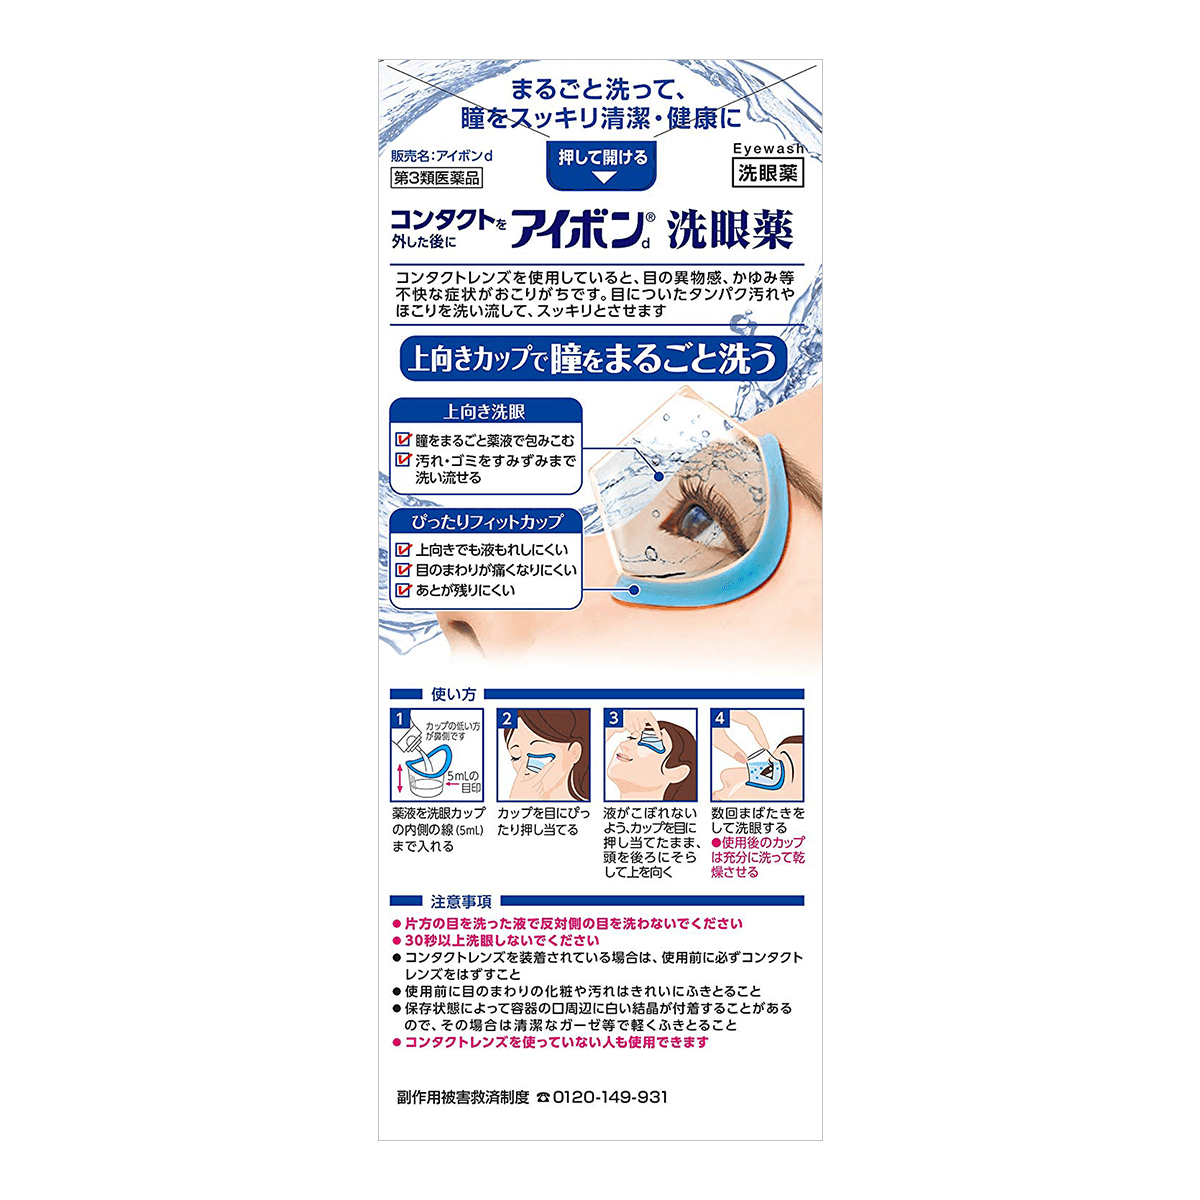 KOBAYASHI小林制药 洗眼药液 清凉度2~3深蓝色 500ml 角膜修复